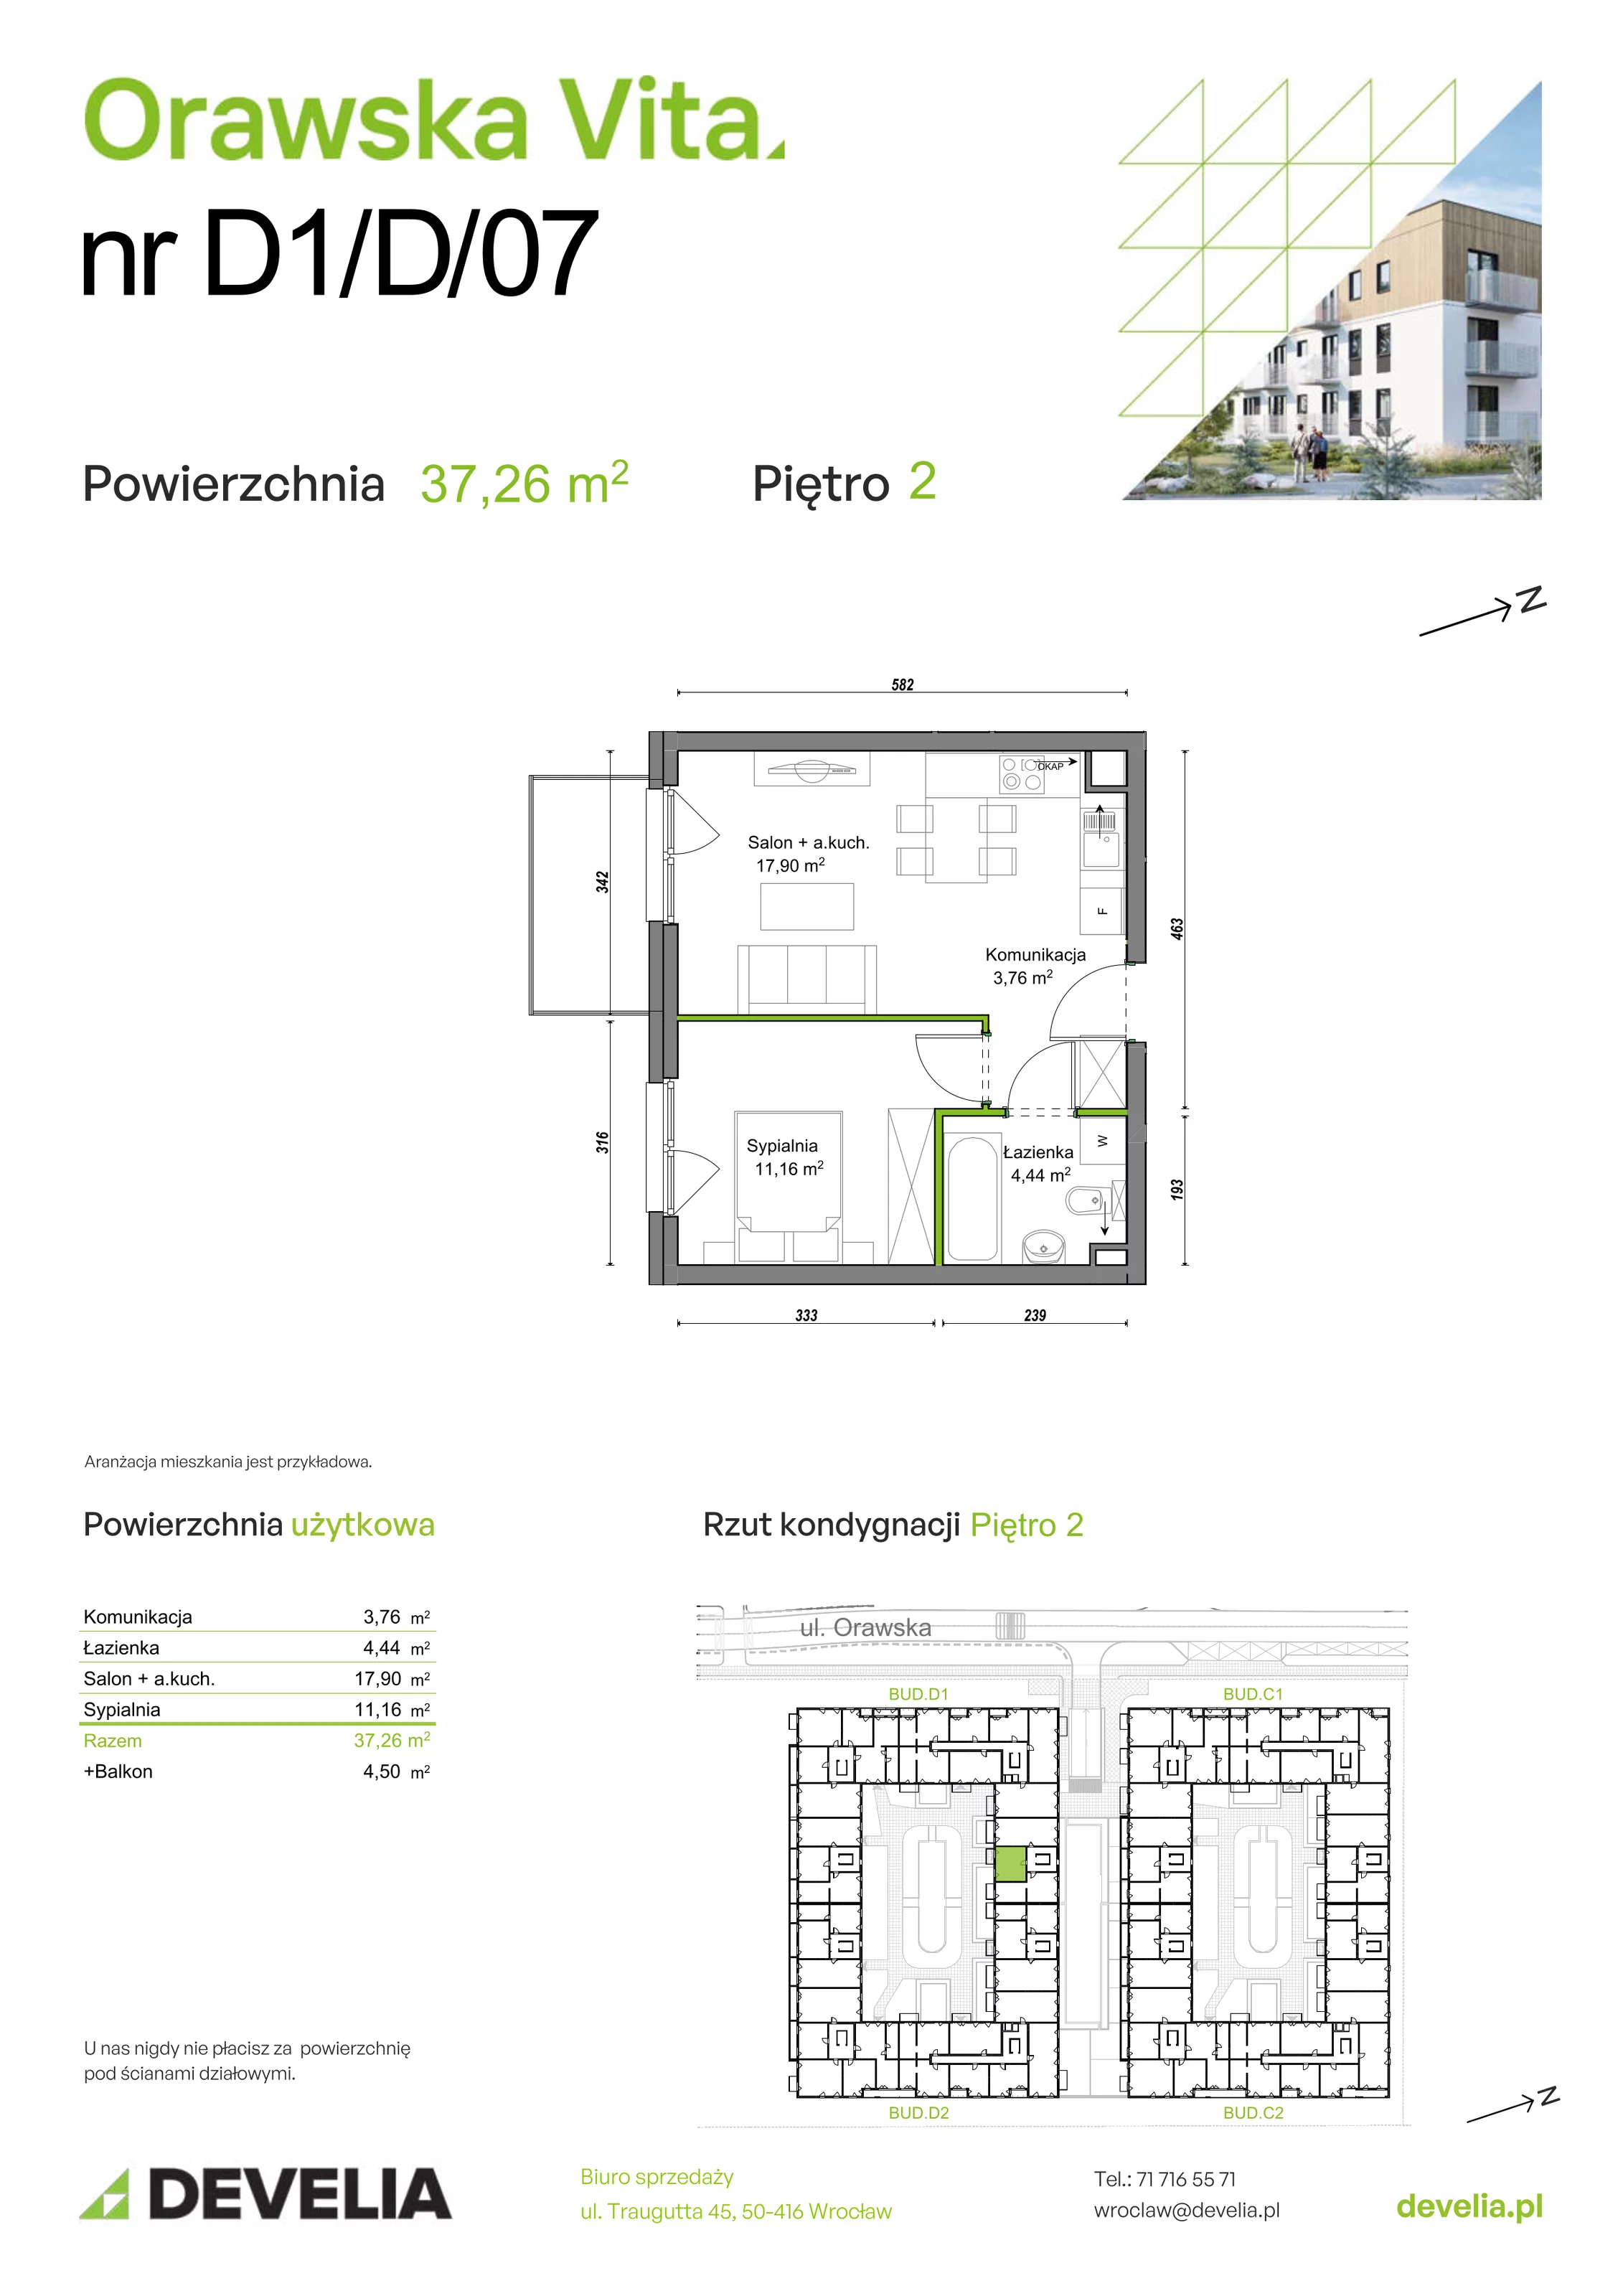 Mieszkanie 37,26 m², piętro 2, oferta nr D1/D/07, Orawska Vita, Wrocław, Ołtaszyn, Krzyki, ul. Orawska 73